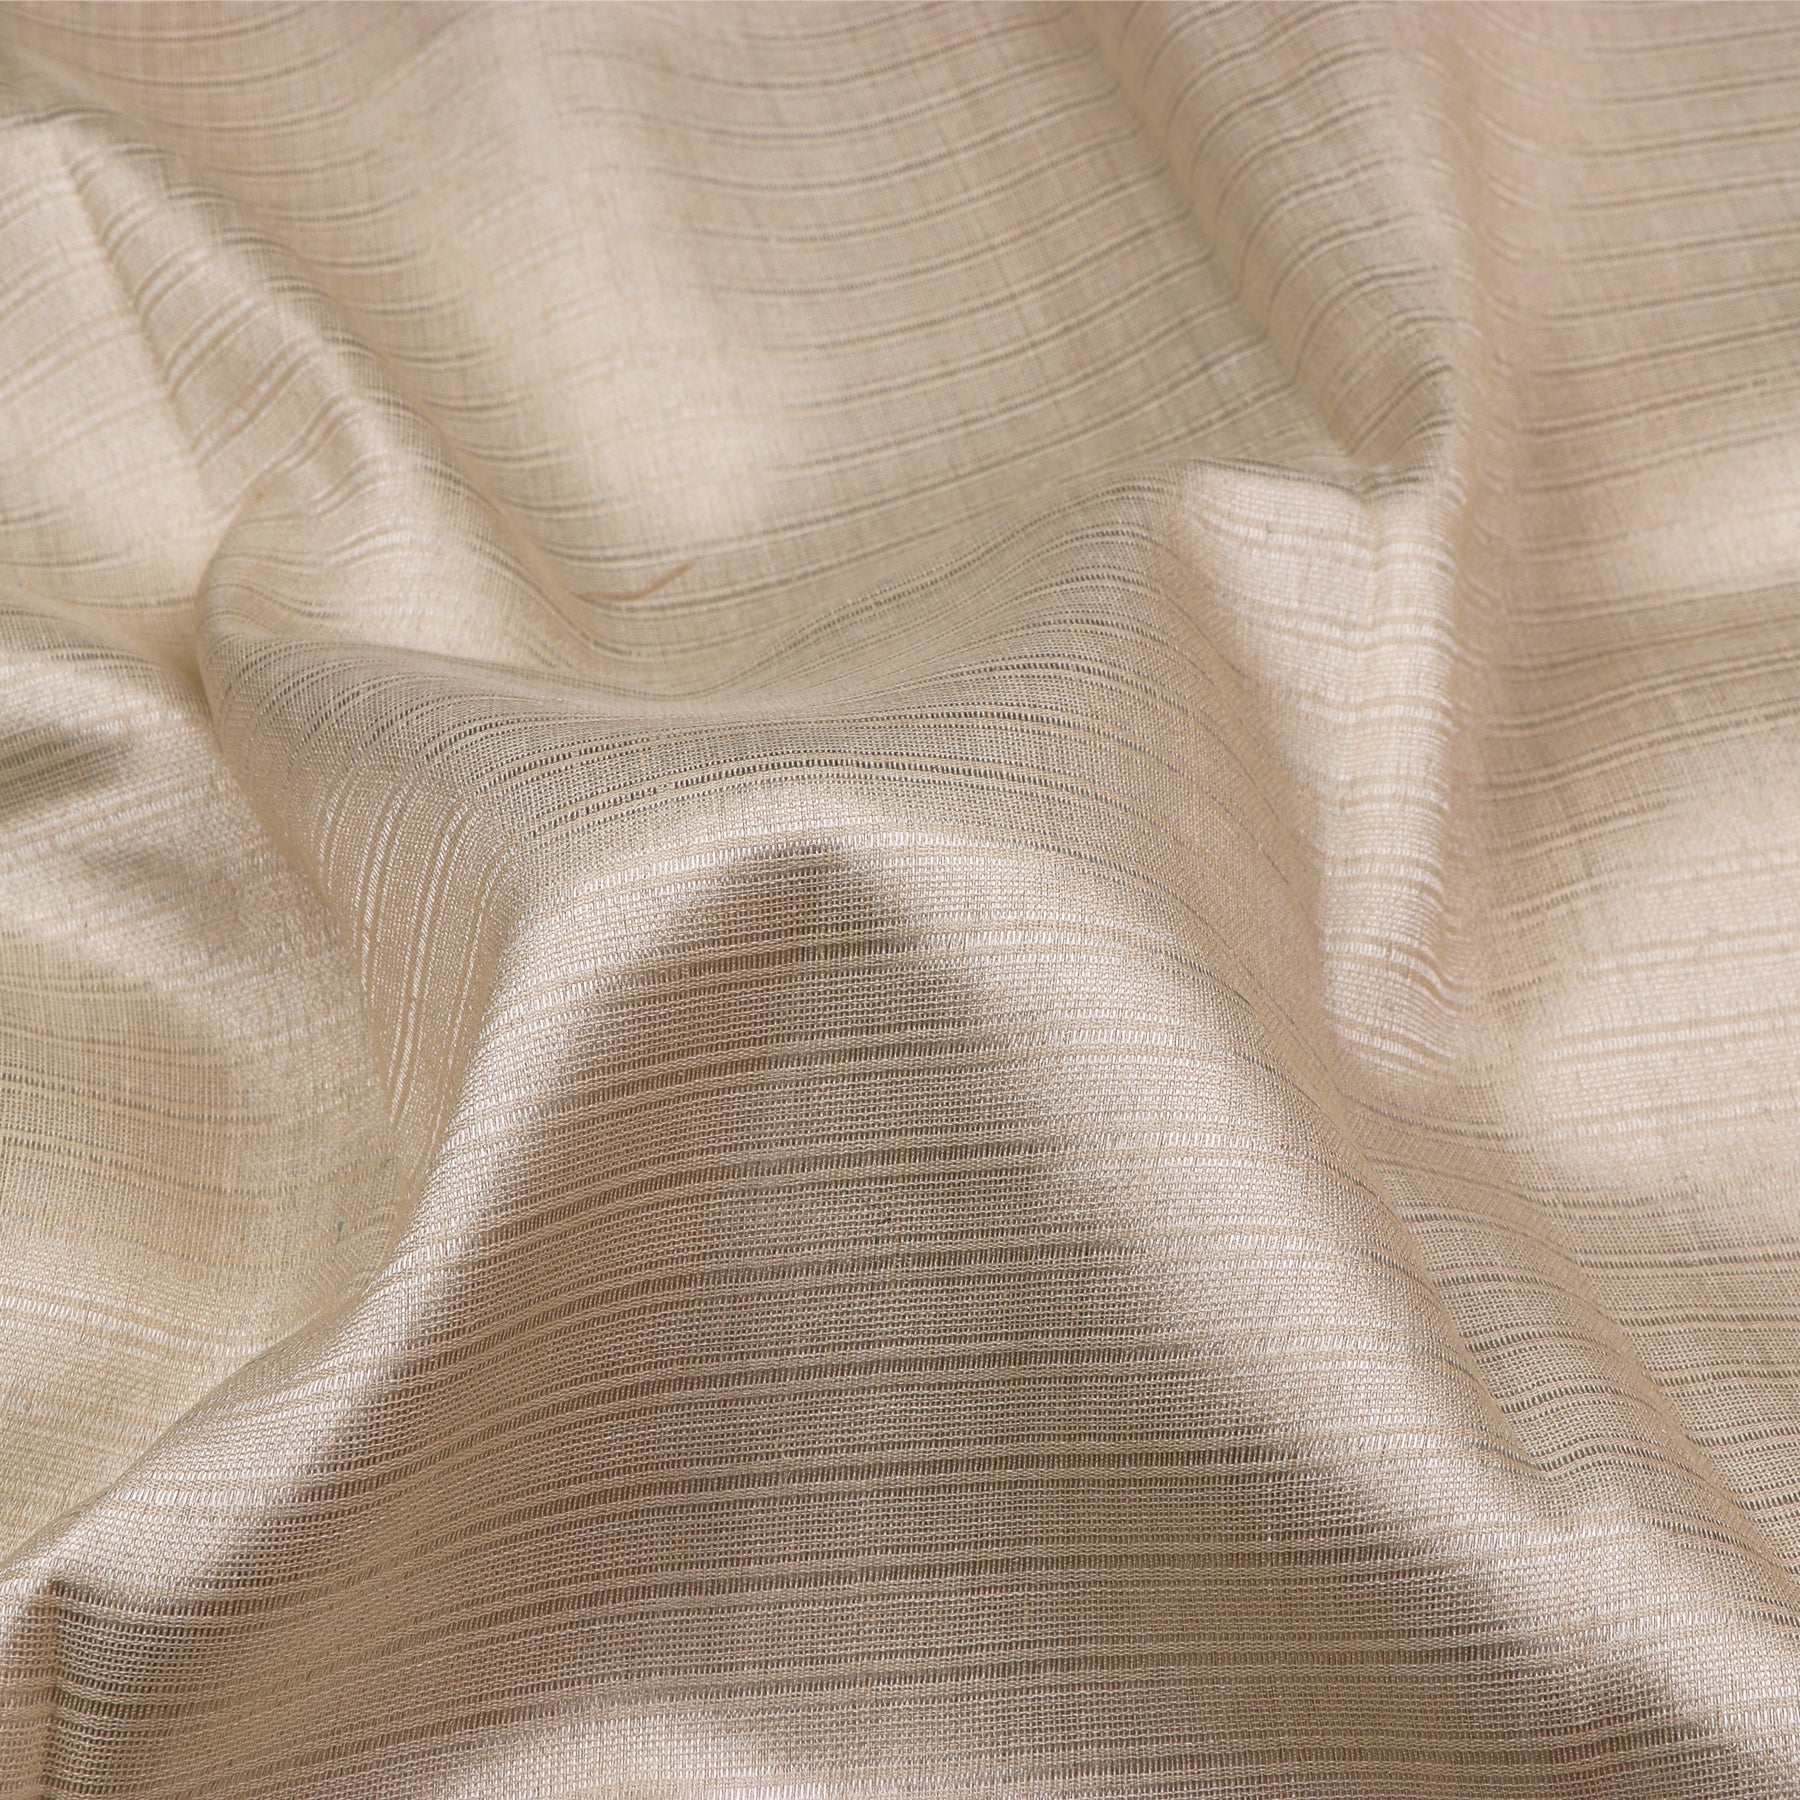 Kanakavalli Kattam - Vari Tissue Silk Blouse Length 140-06-113091 - Fabric View